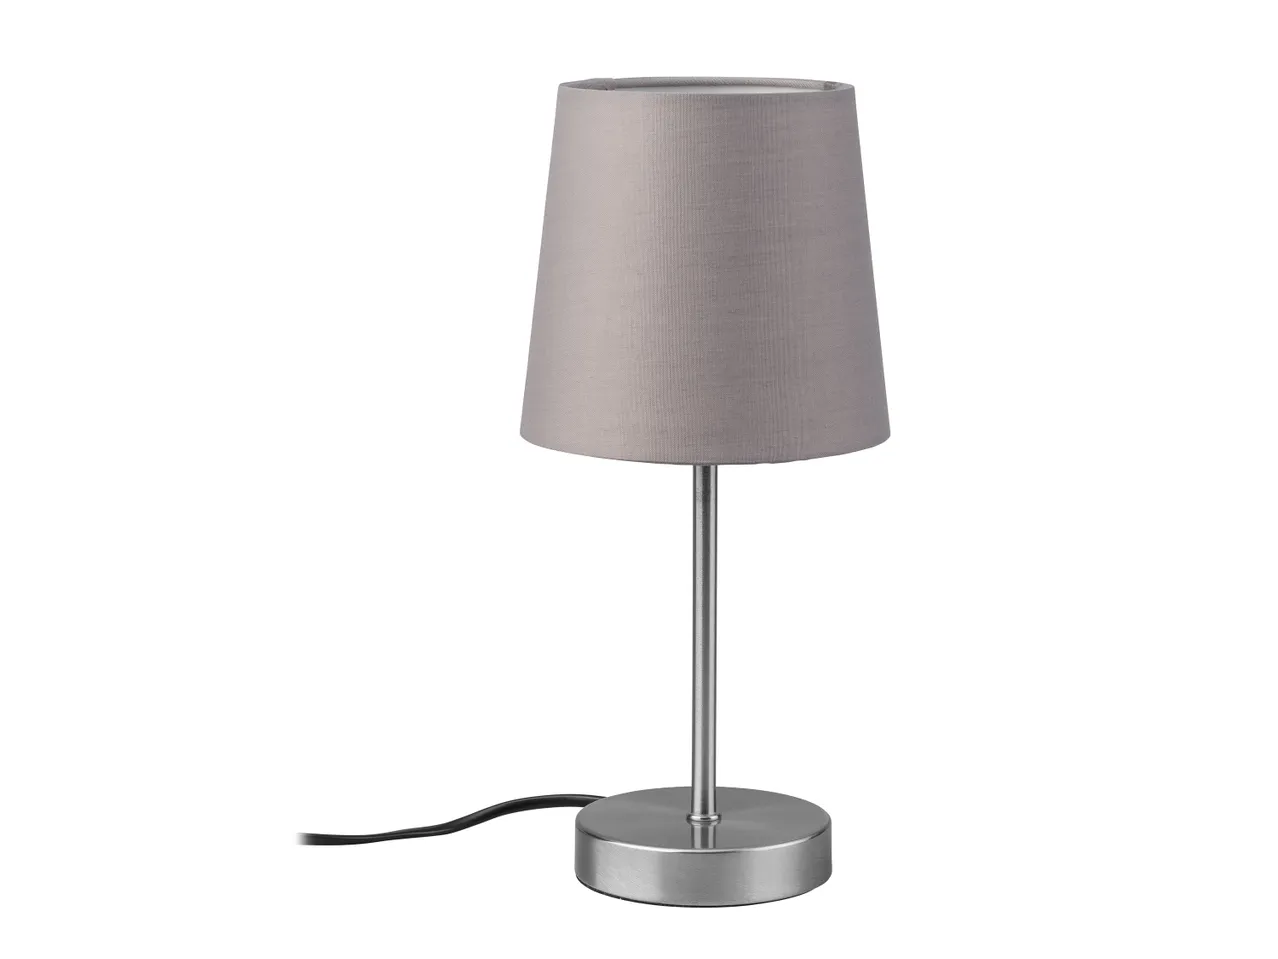 Lampada LED da tavolo , prezzo 14.99 EUR 
Lampada LED da tavolo 14 x 30,8 cm (Ø ...